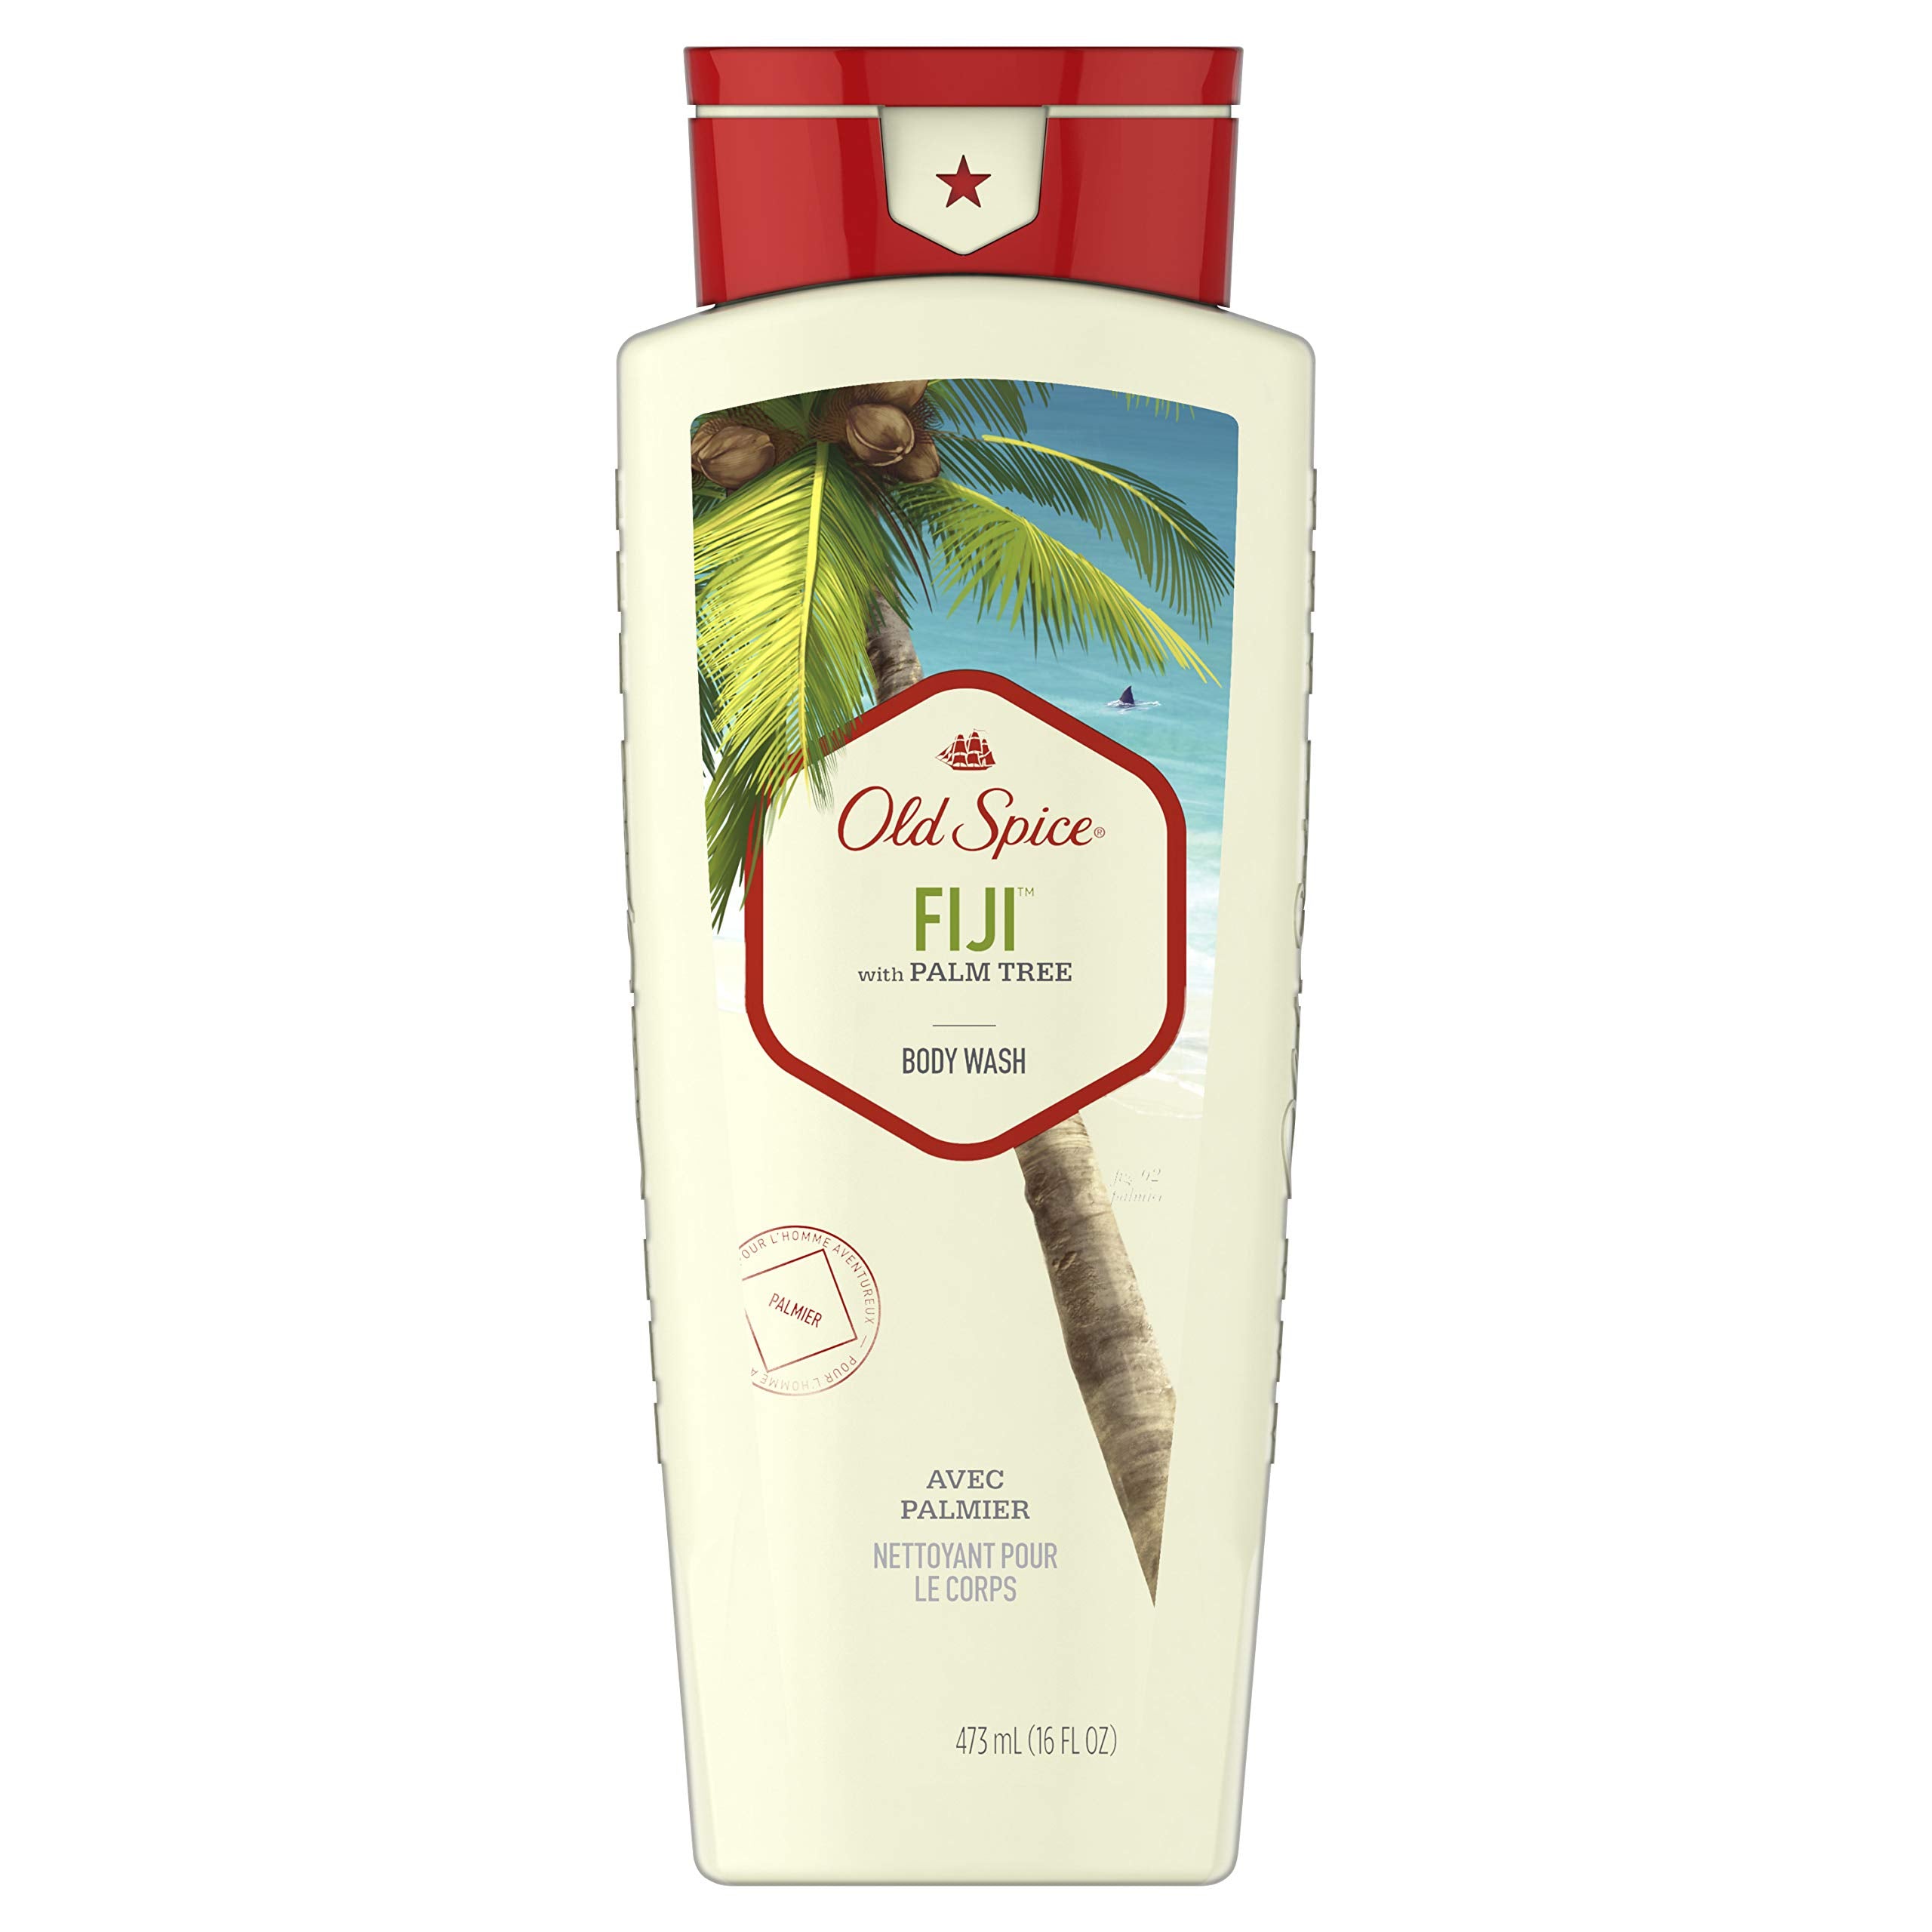 Old Spice Fiji, 16 oz, Pack of 3